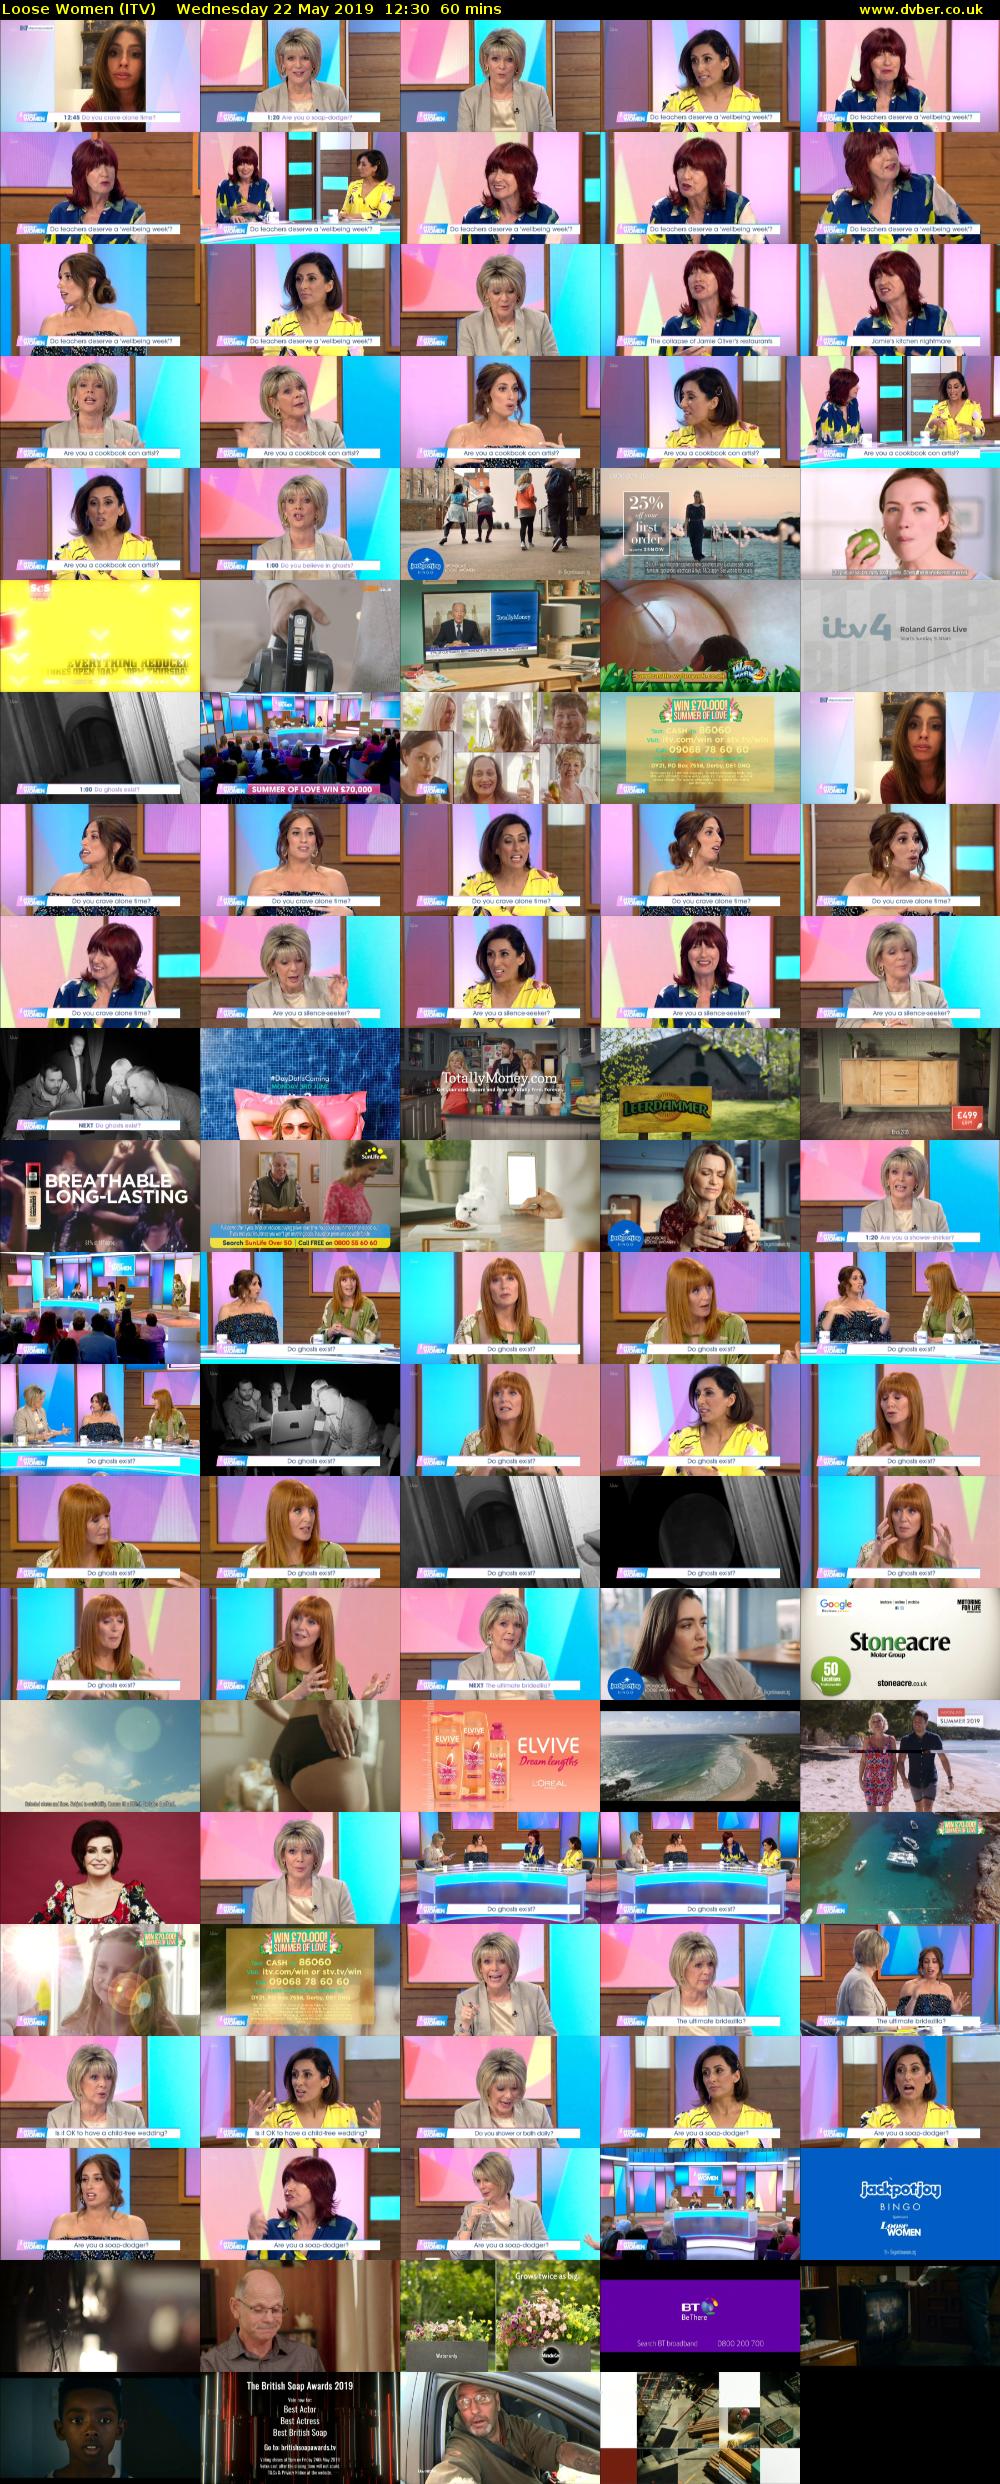 Loose Women (ITV) Wednesday 22 May 2019 12:30 - 13:30